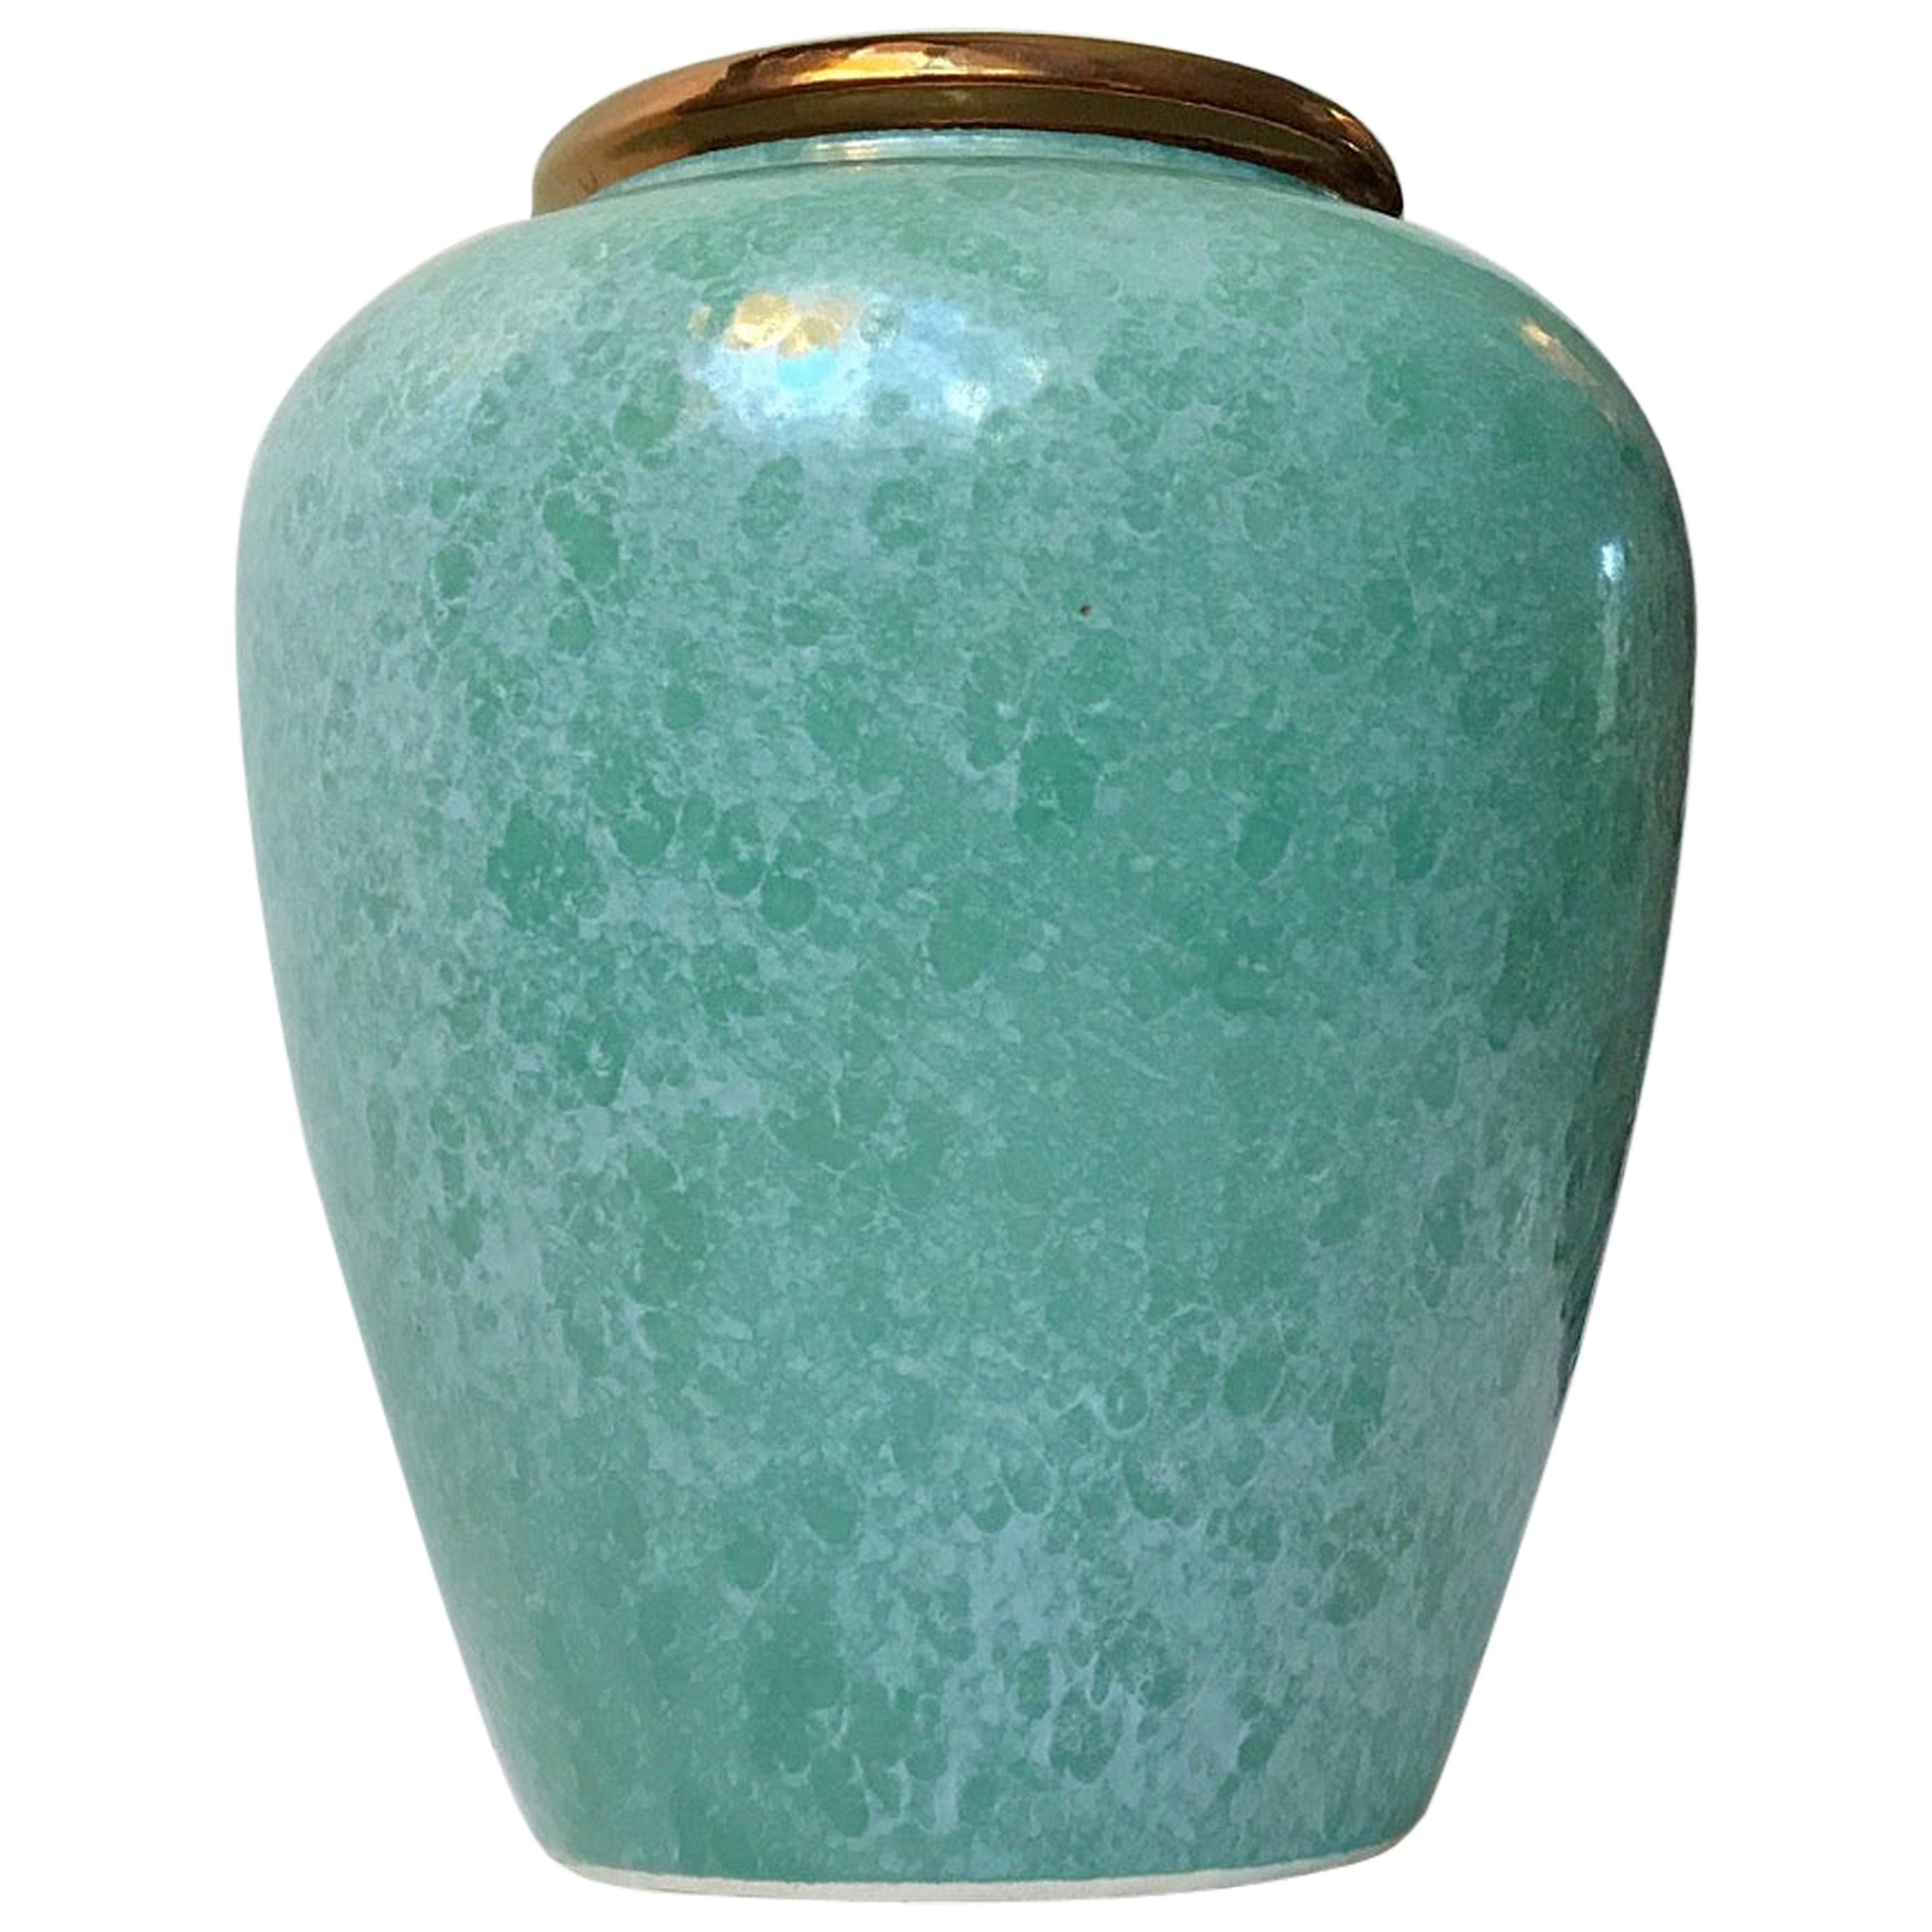 Scandinavian Pottery Vase with Speckled Green Glaze, 1970s